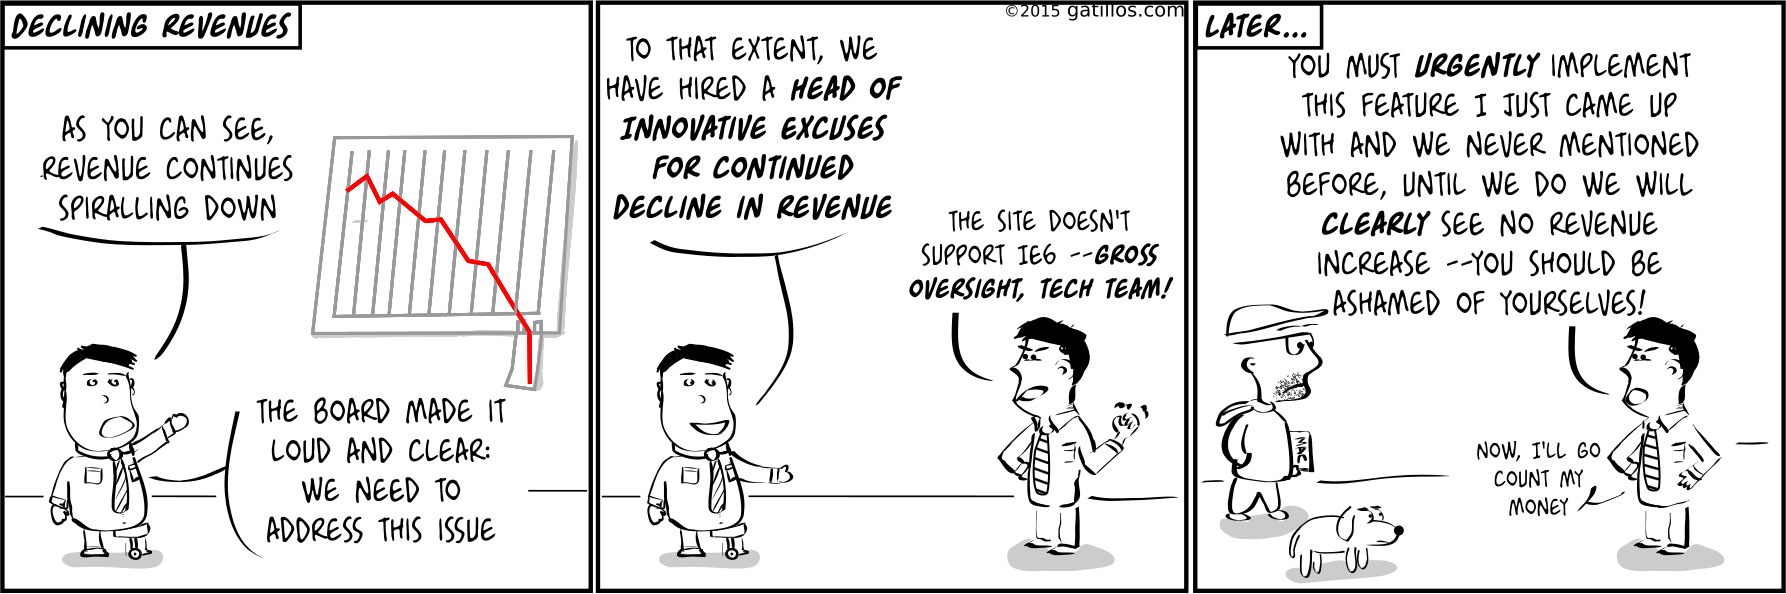 Paul the innovator (78): Declining revenue